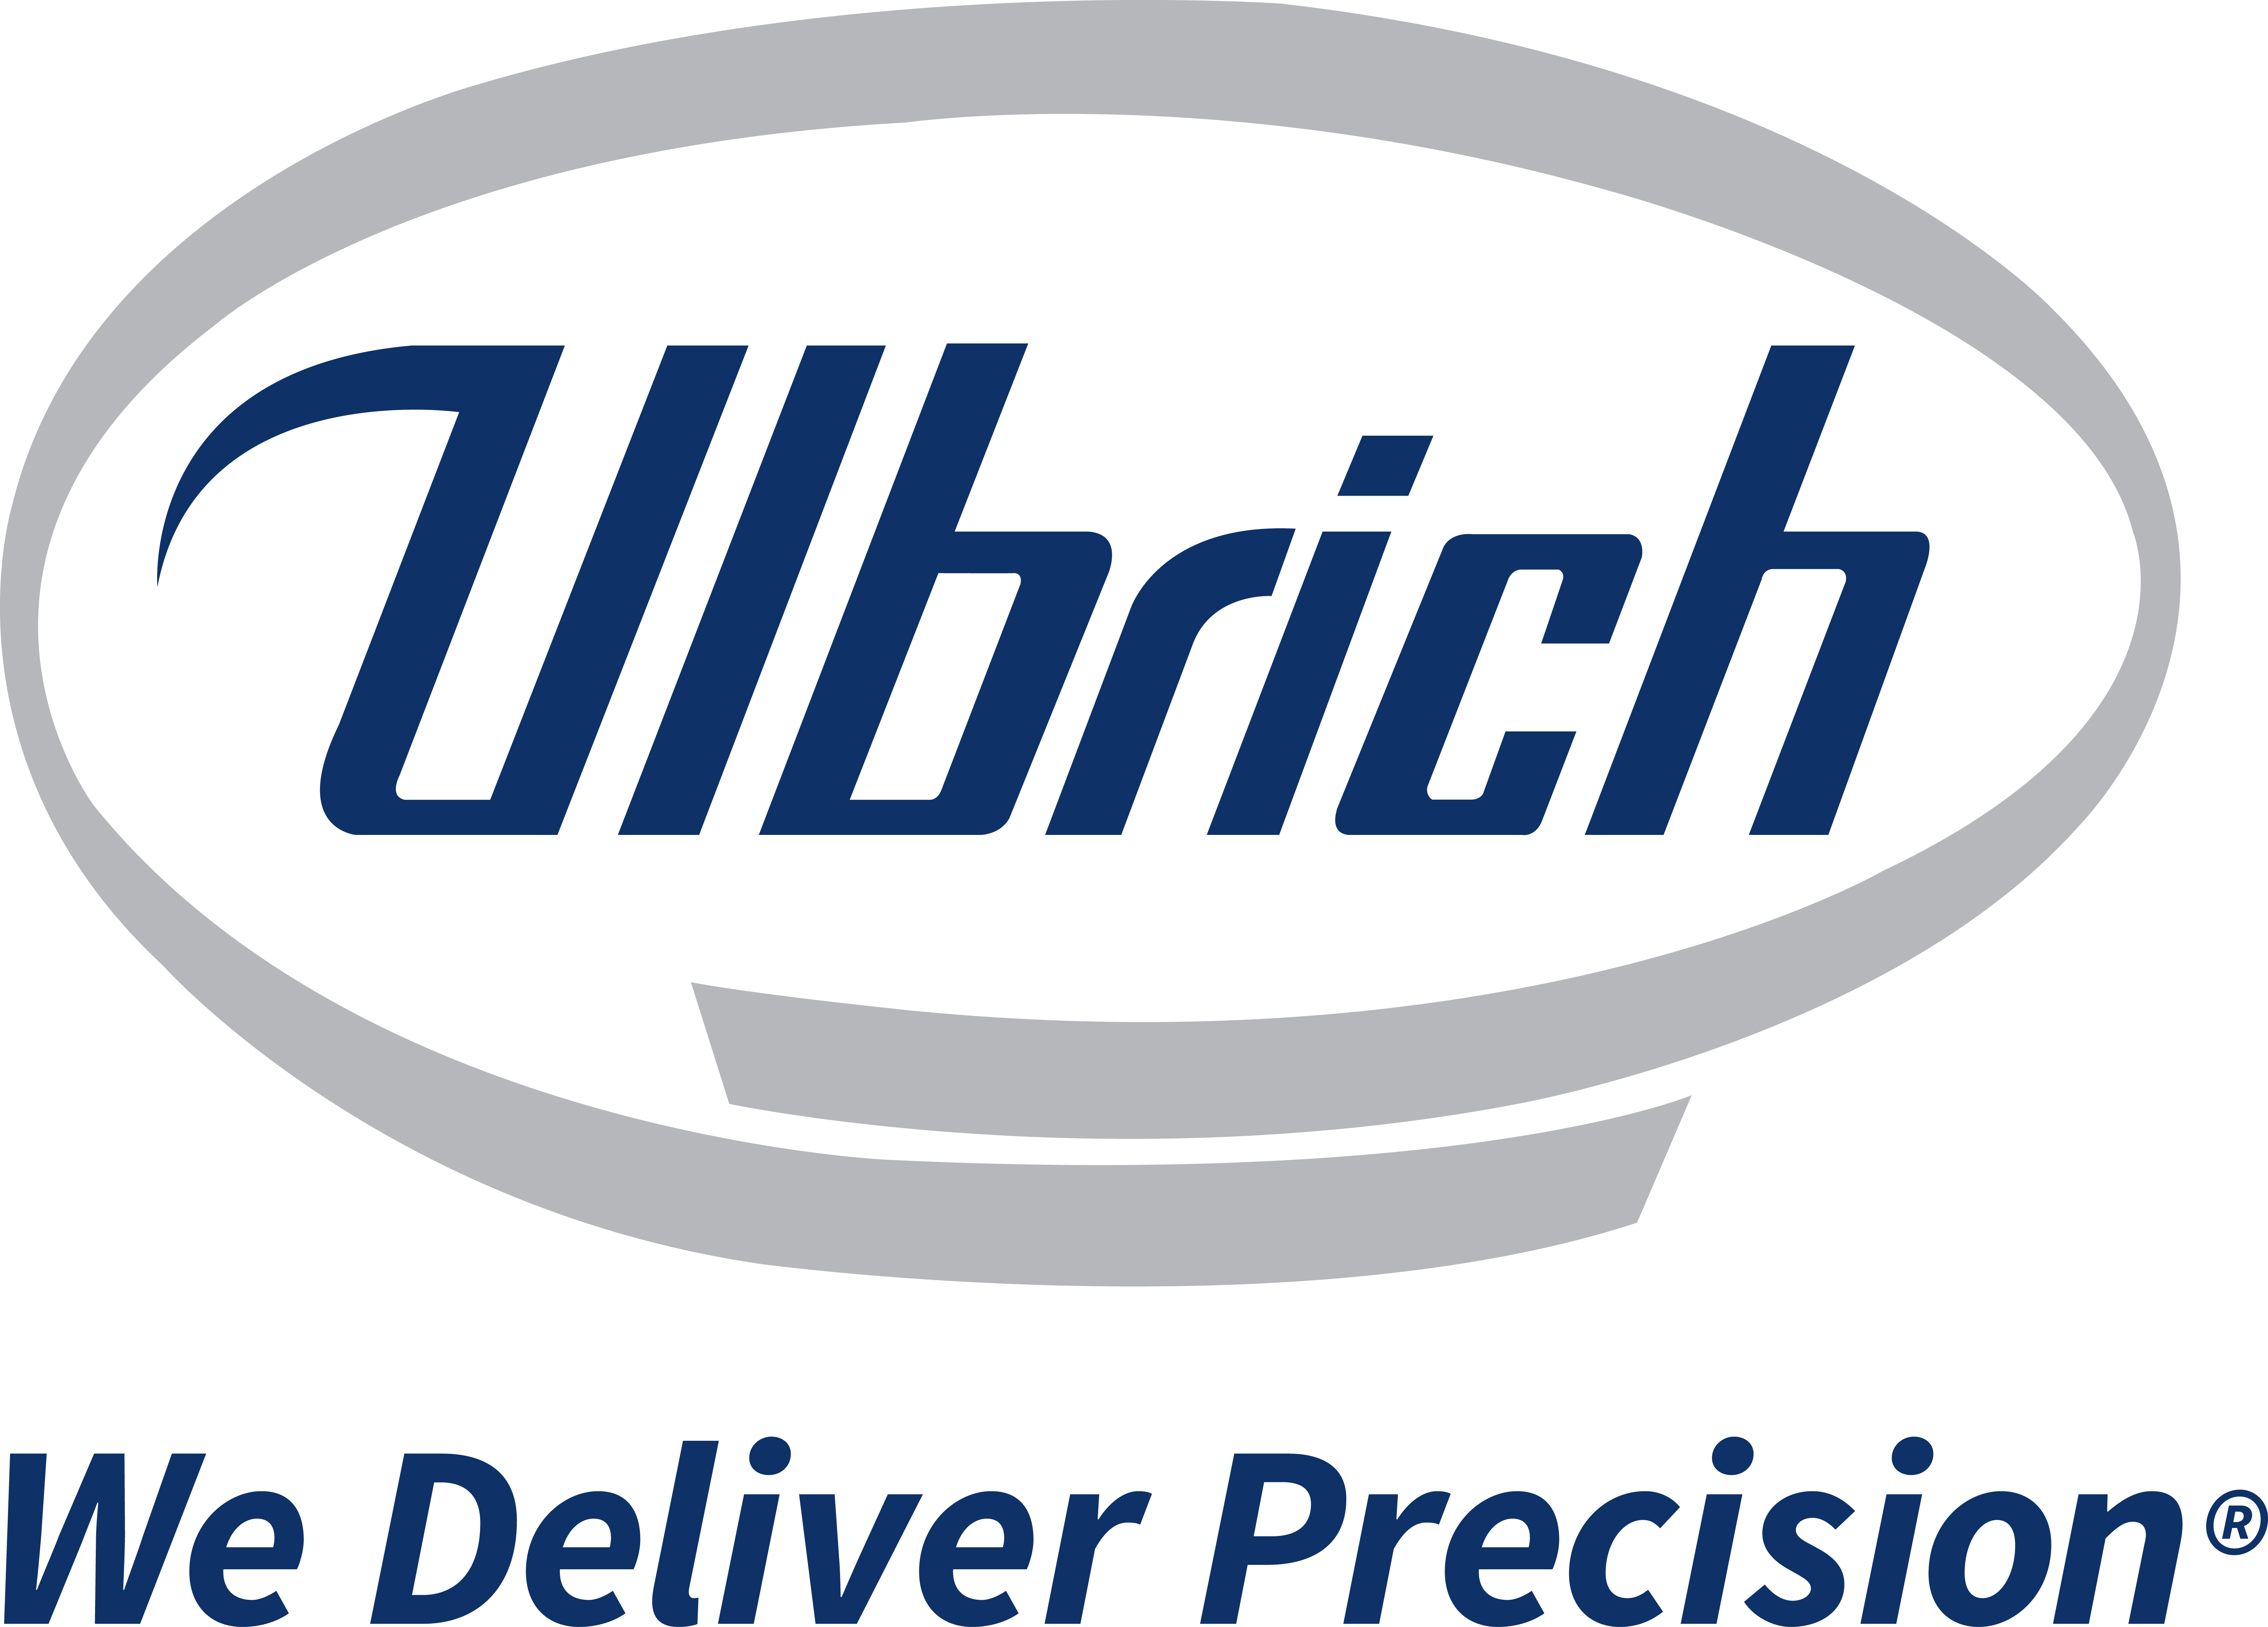 Ulbrich logo pms